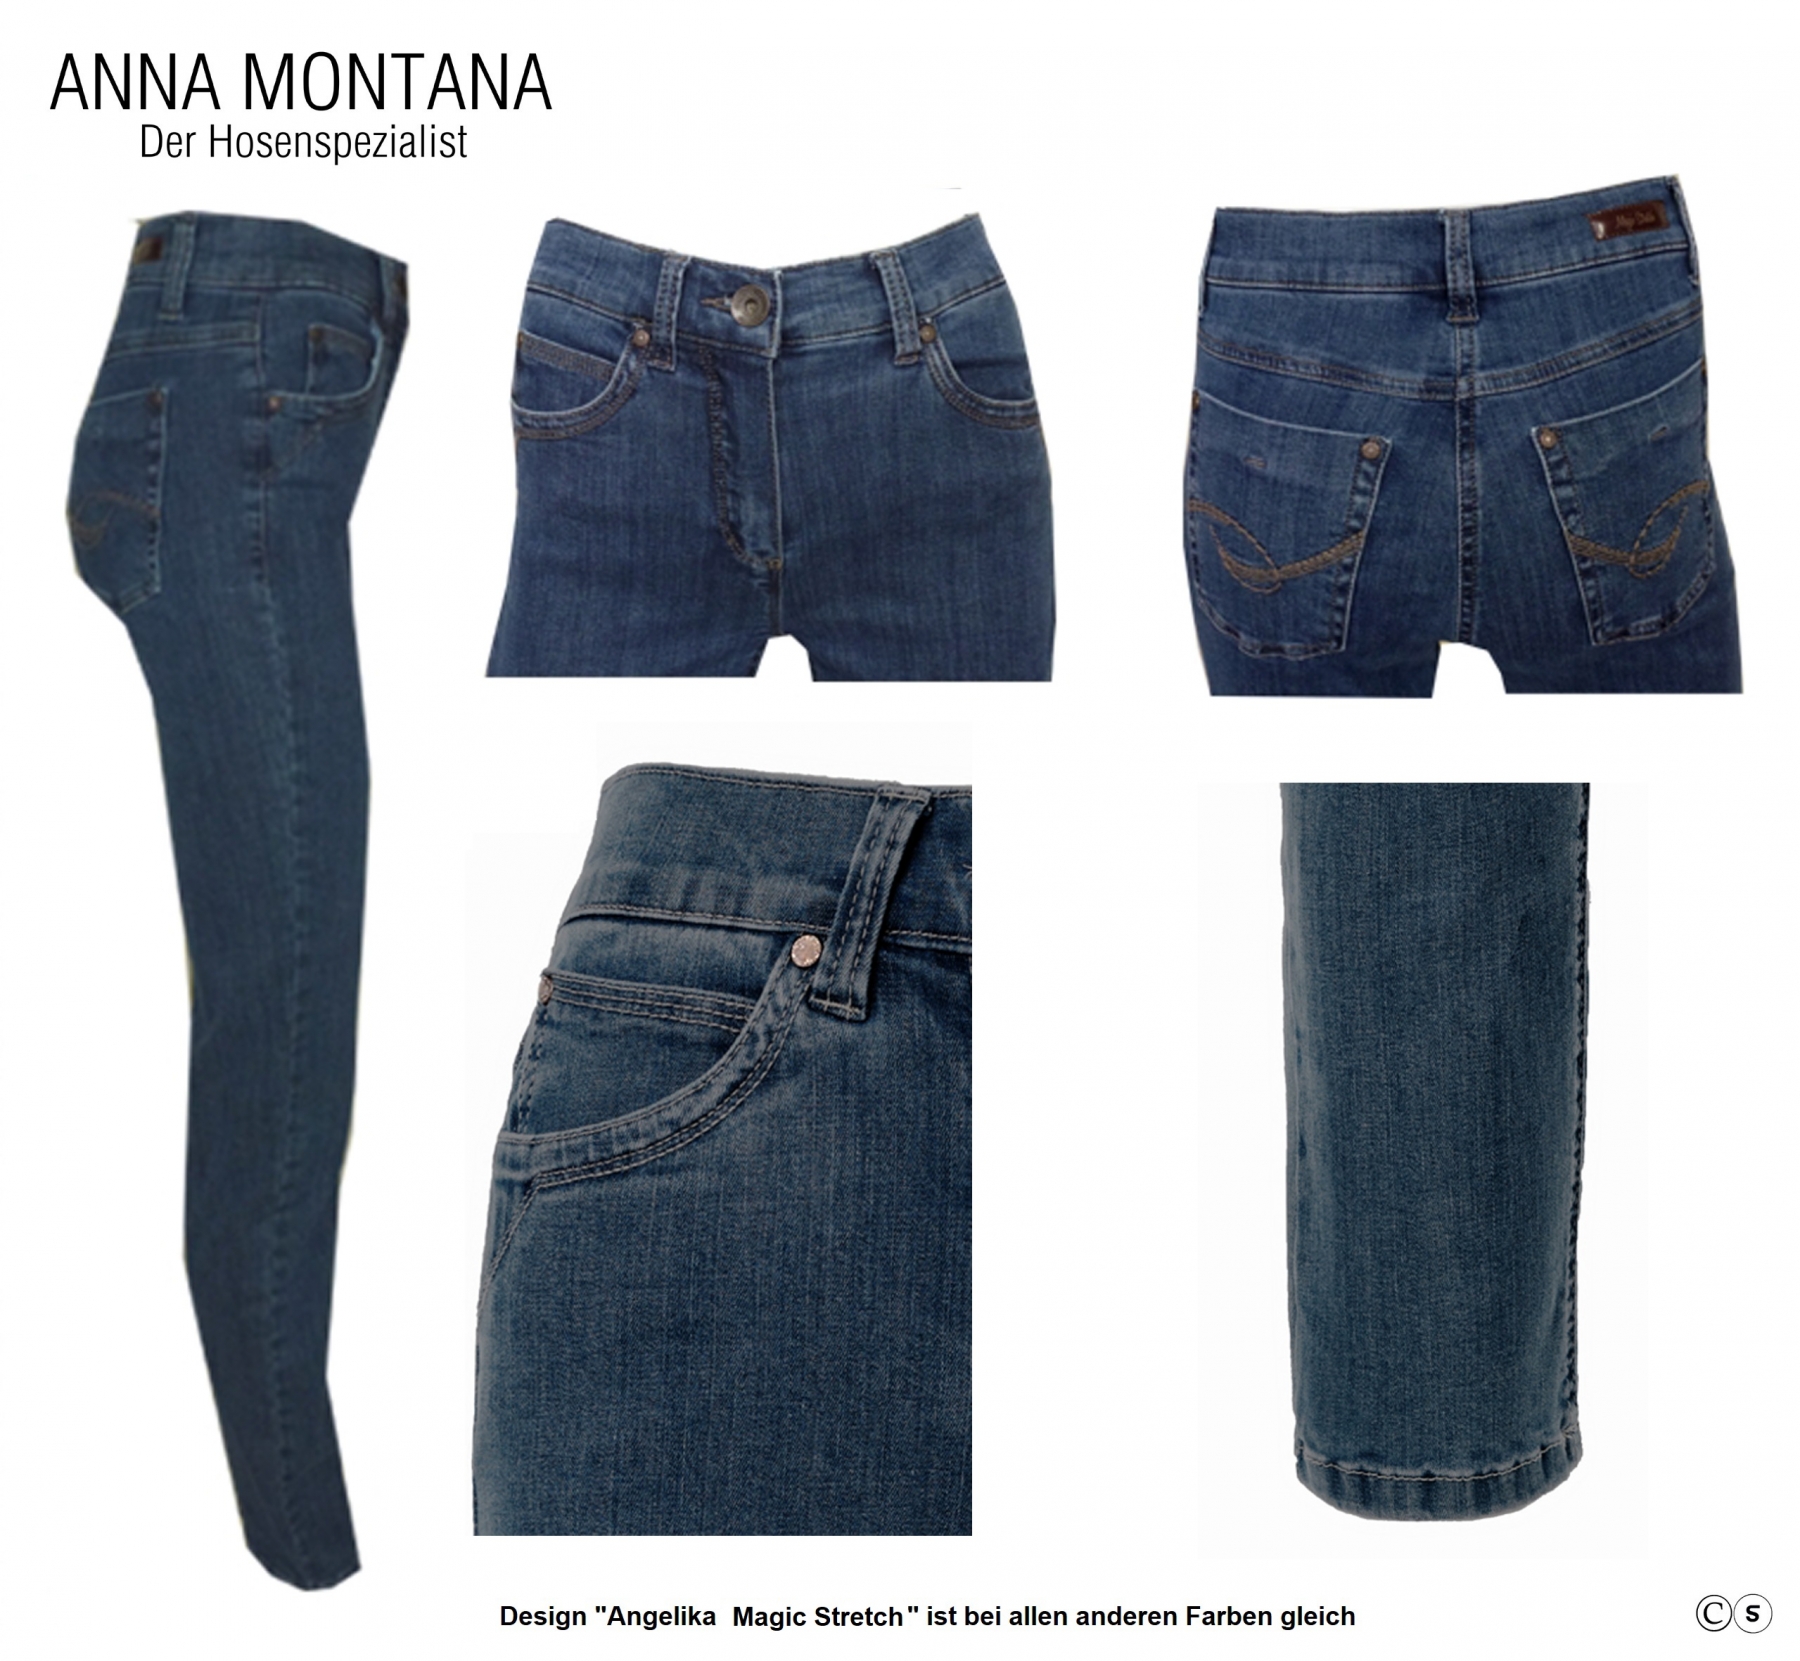 Reduces Angelika 1975 / ER / Magic Stretch Trousers /Jeans ANNA MONTANA - Kopie